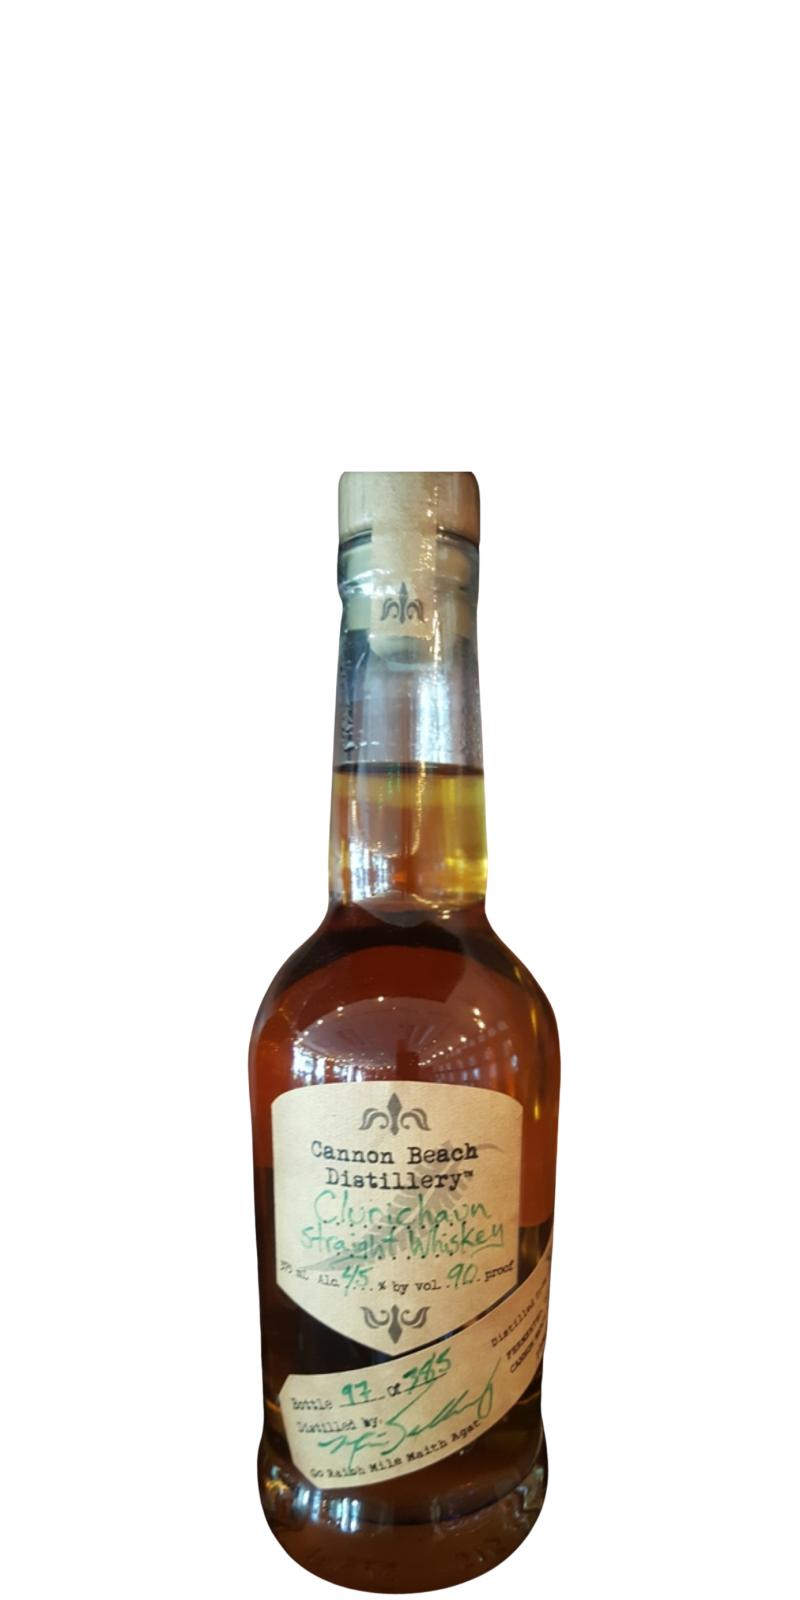 Cannon Beach Distillery Clurichaun Straight Whisky Donlon Shaks Amber Rum 45% 375ml